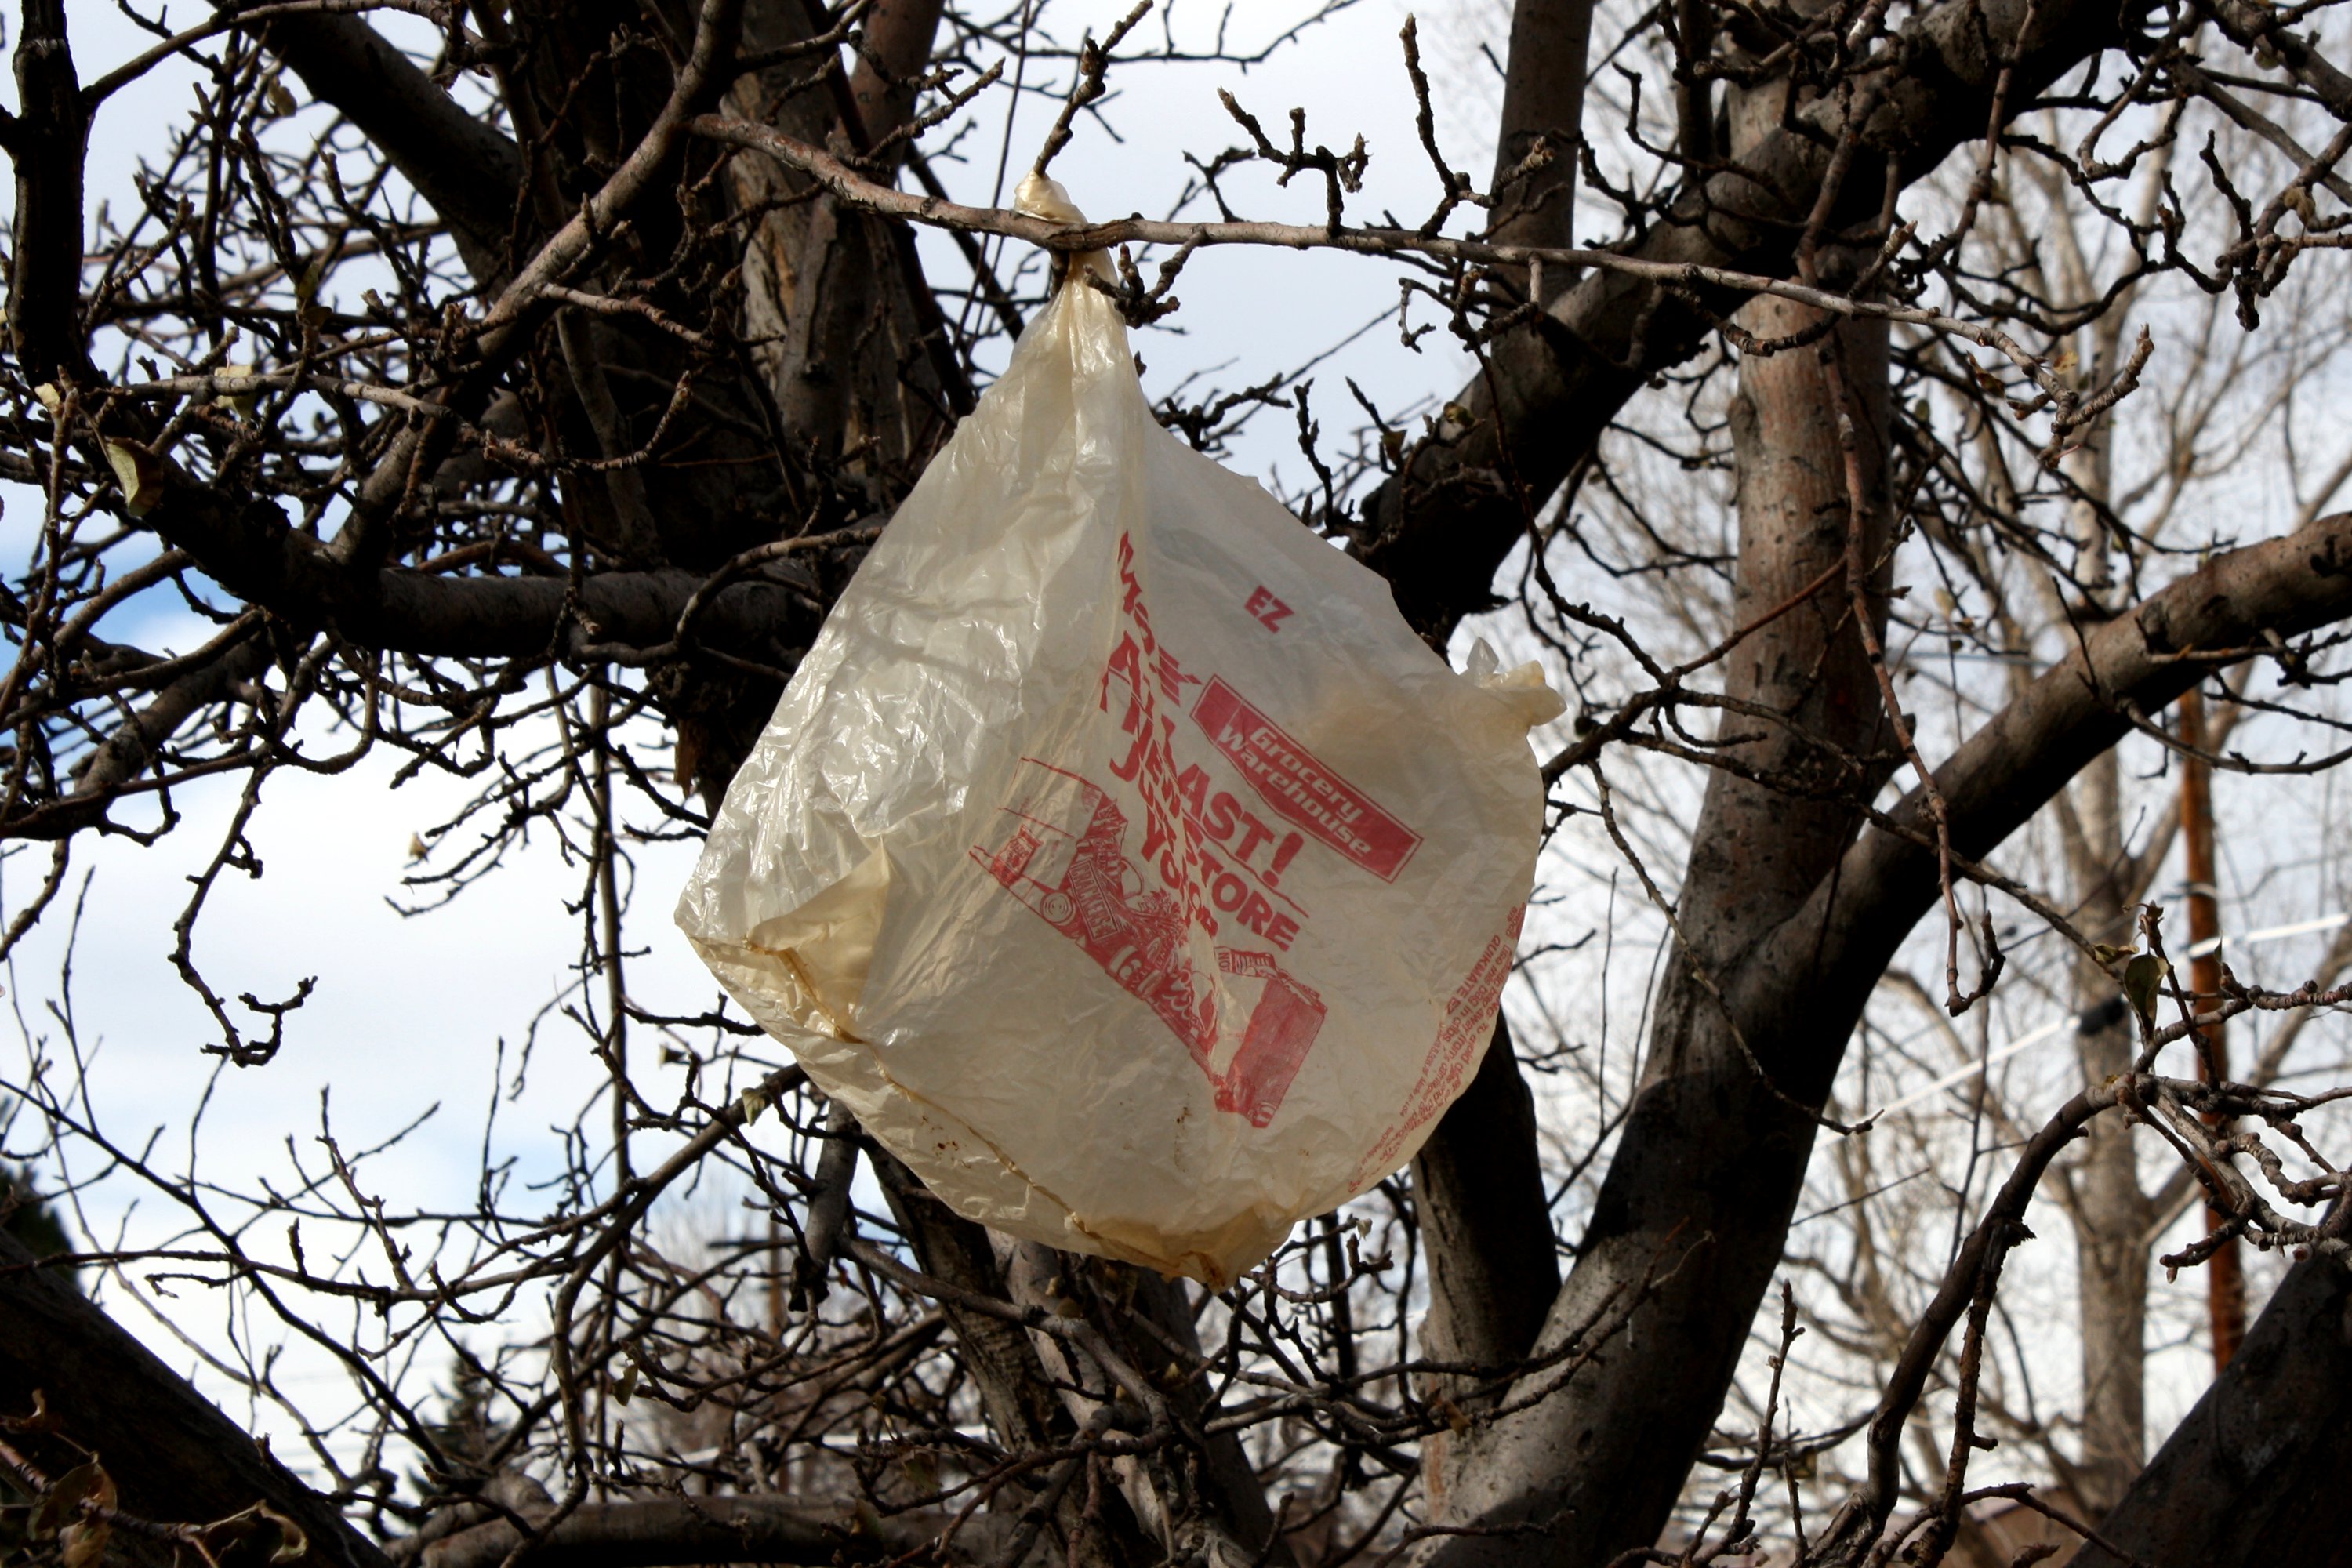 Dispose of Plastic Bags Right